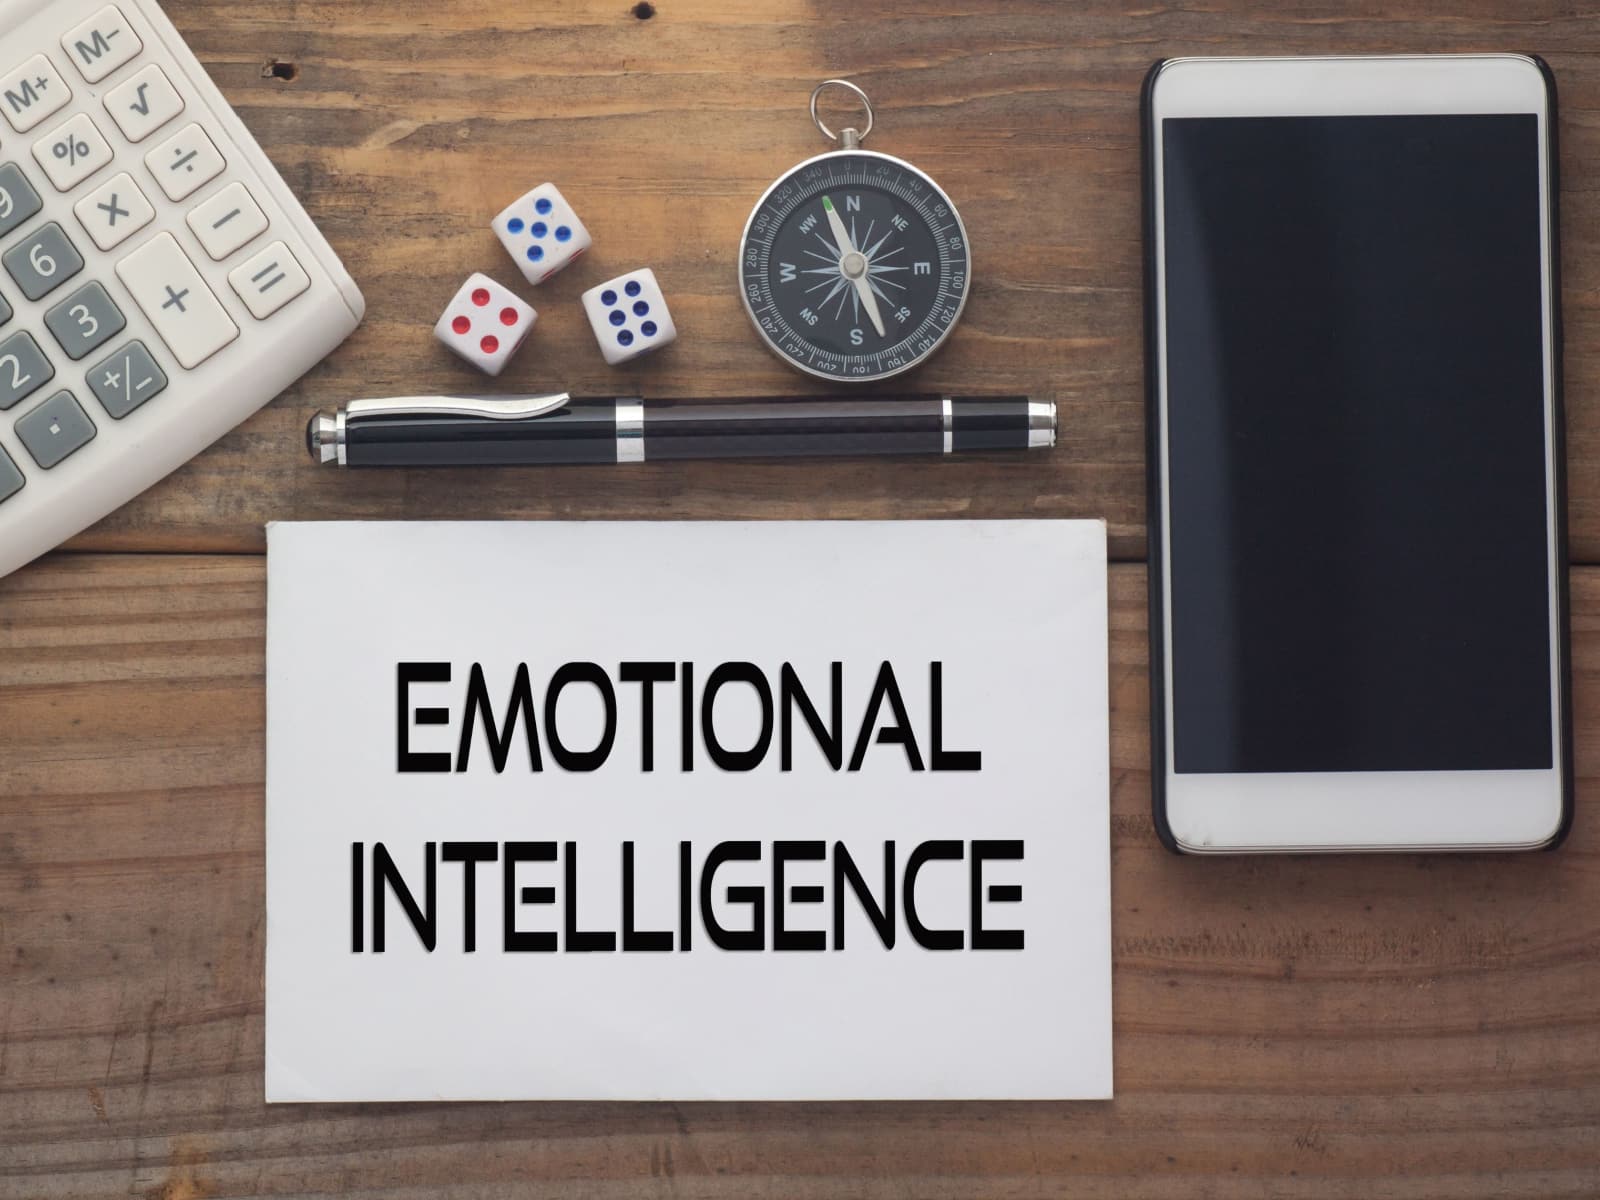 Emotional intelligence in marketing